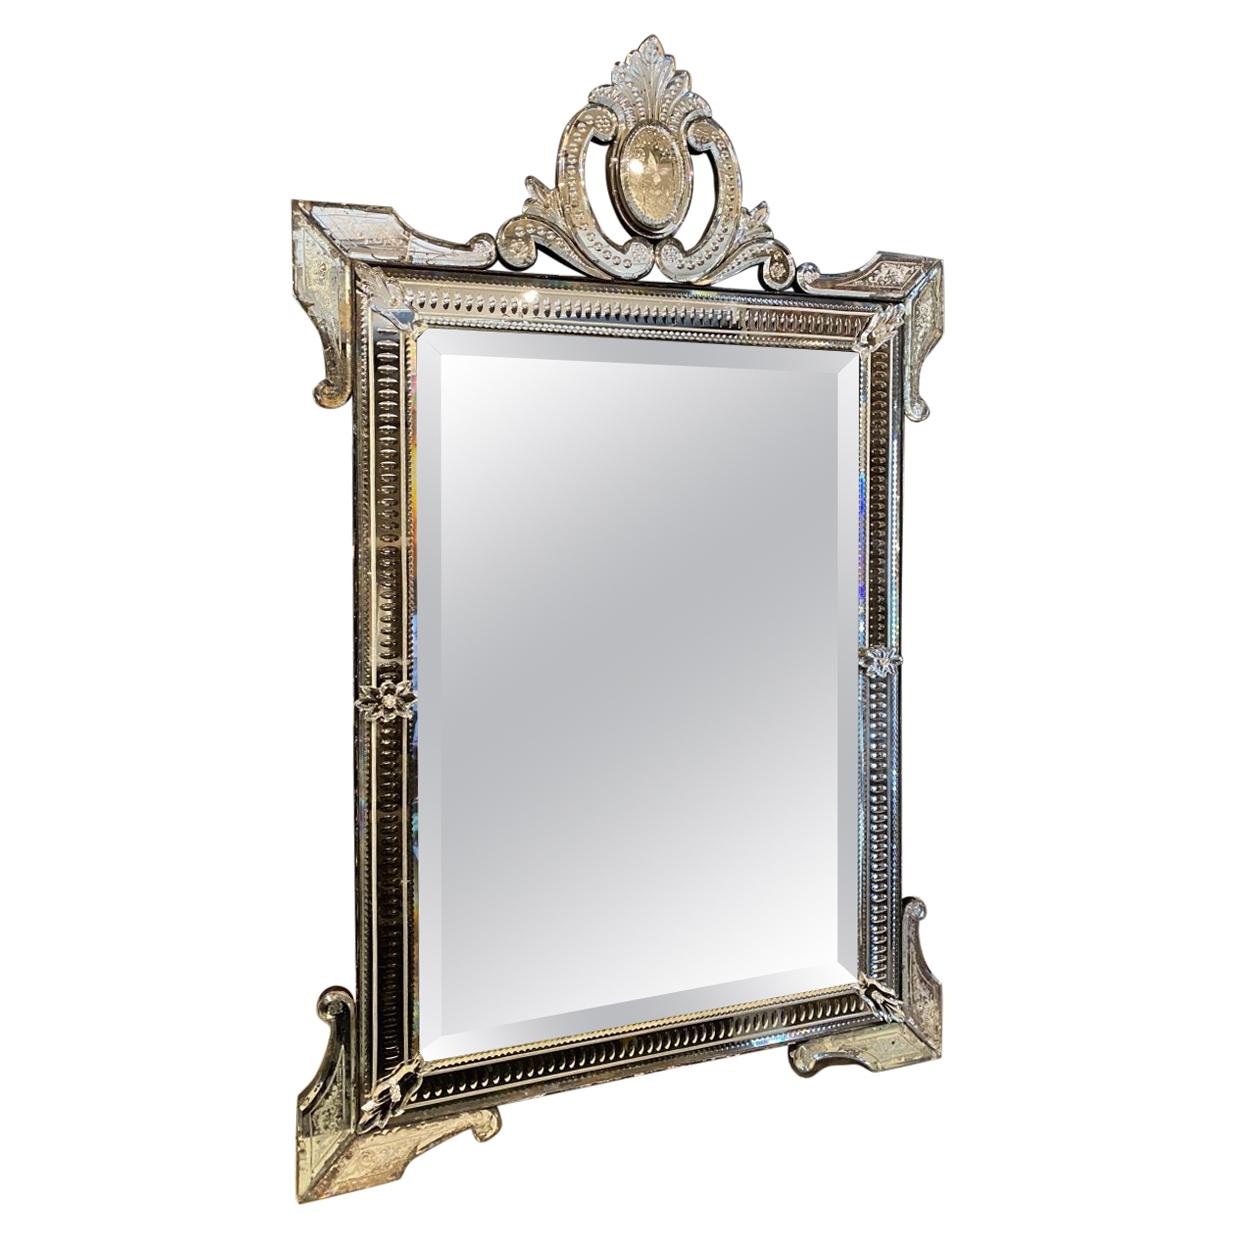 Ornate Vintage Venetian Mirror, circa 1920s-1930s, France